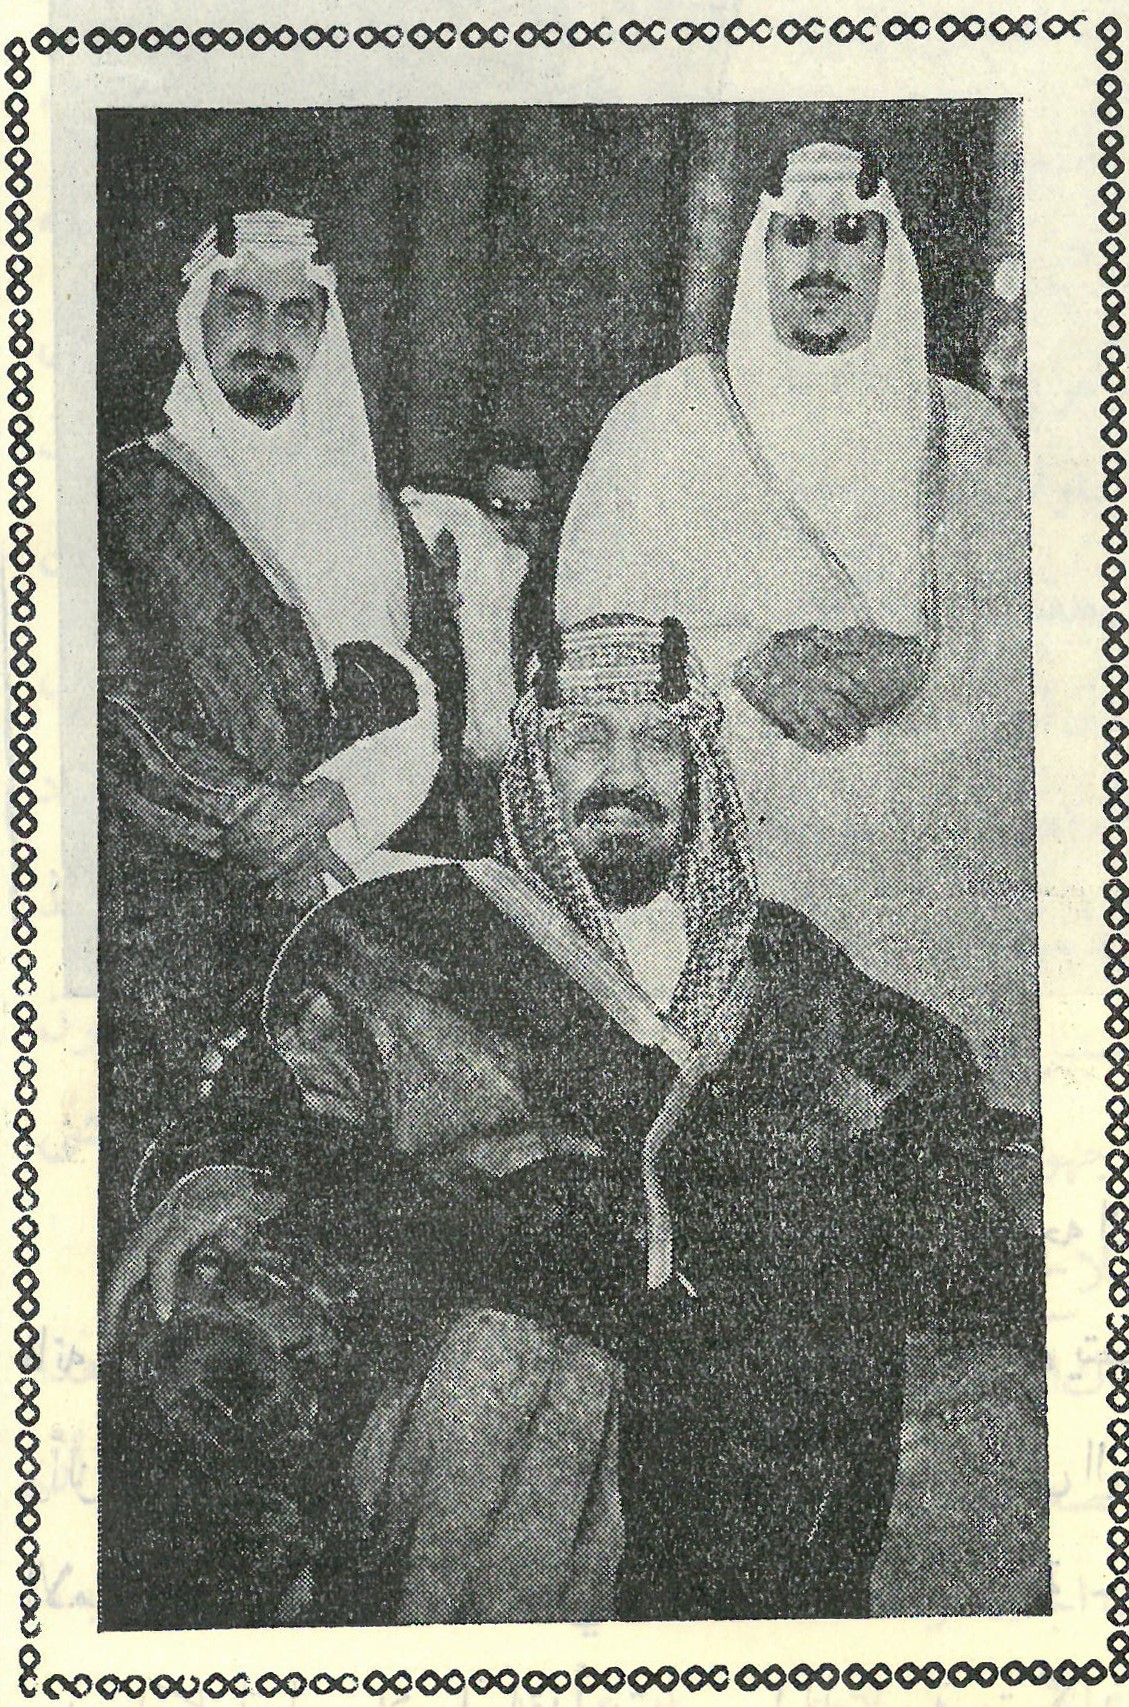 King Abdulaziz with his sons The Kings Saud and Faisal